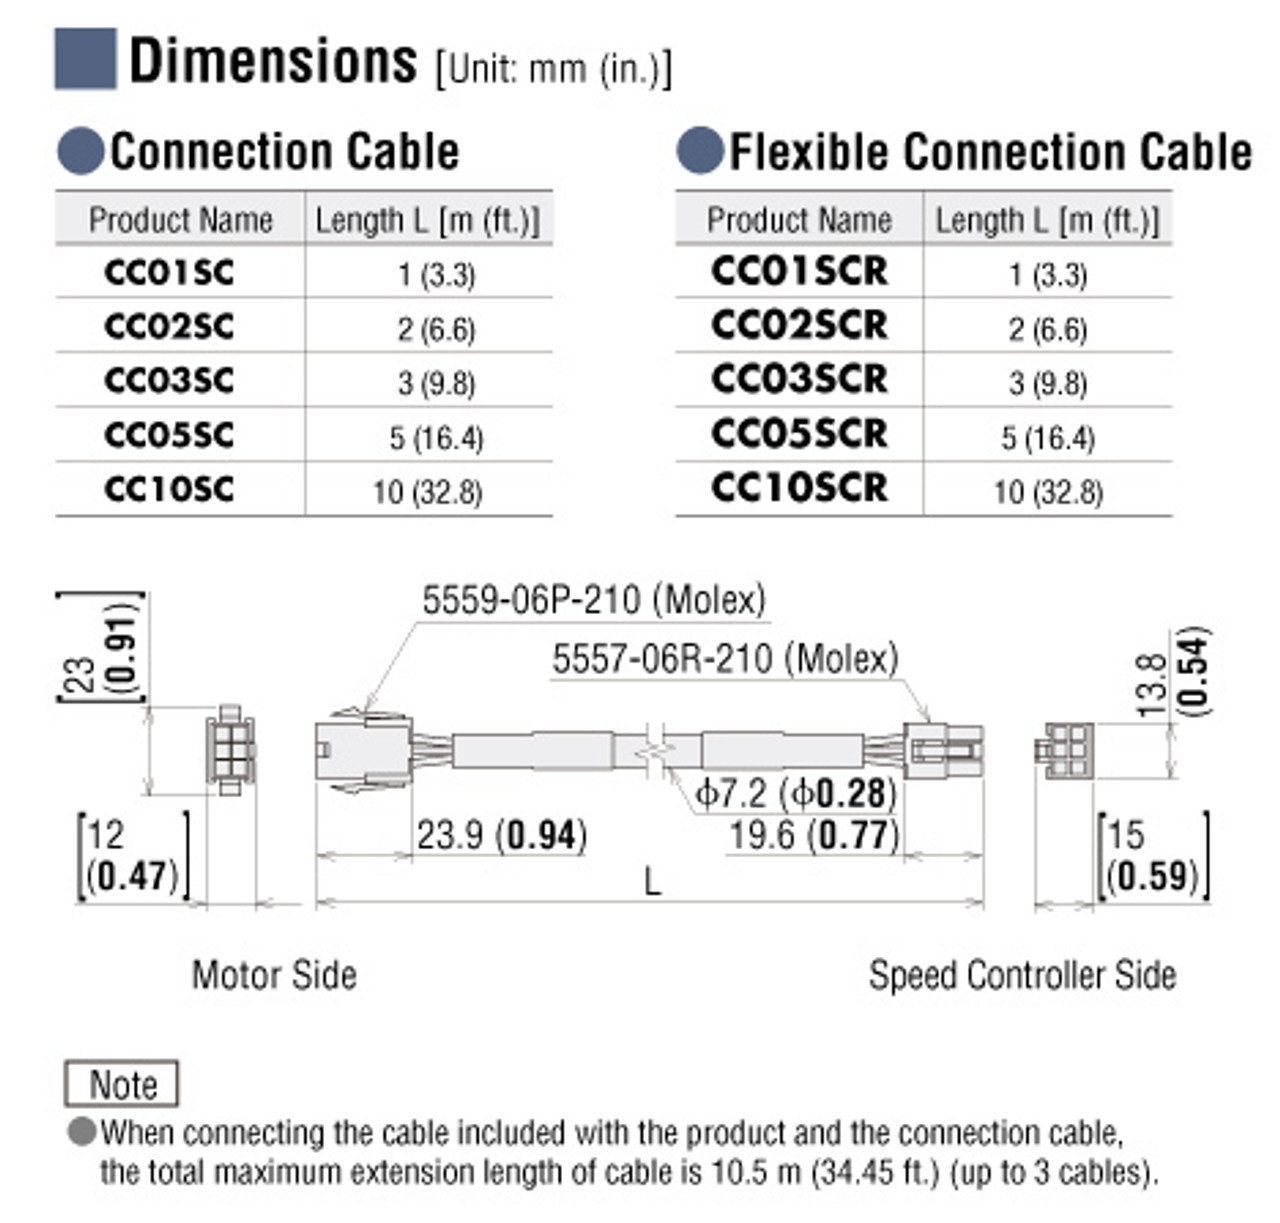 CC01SC - Dimensions